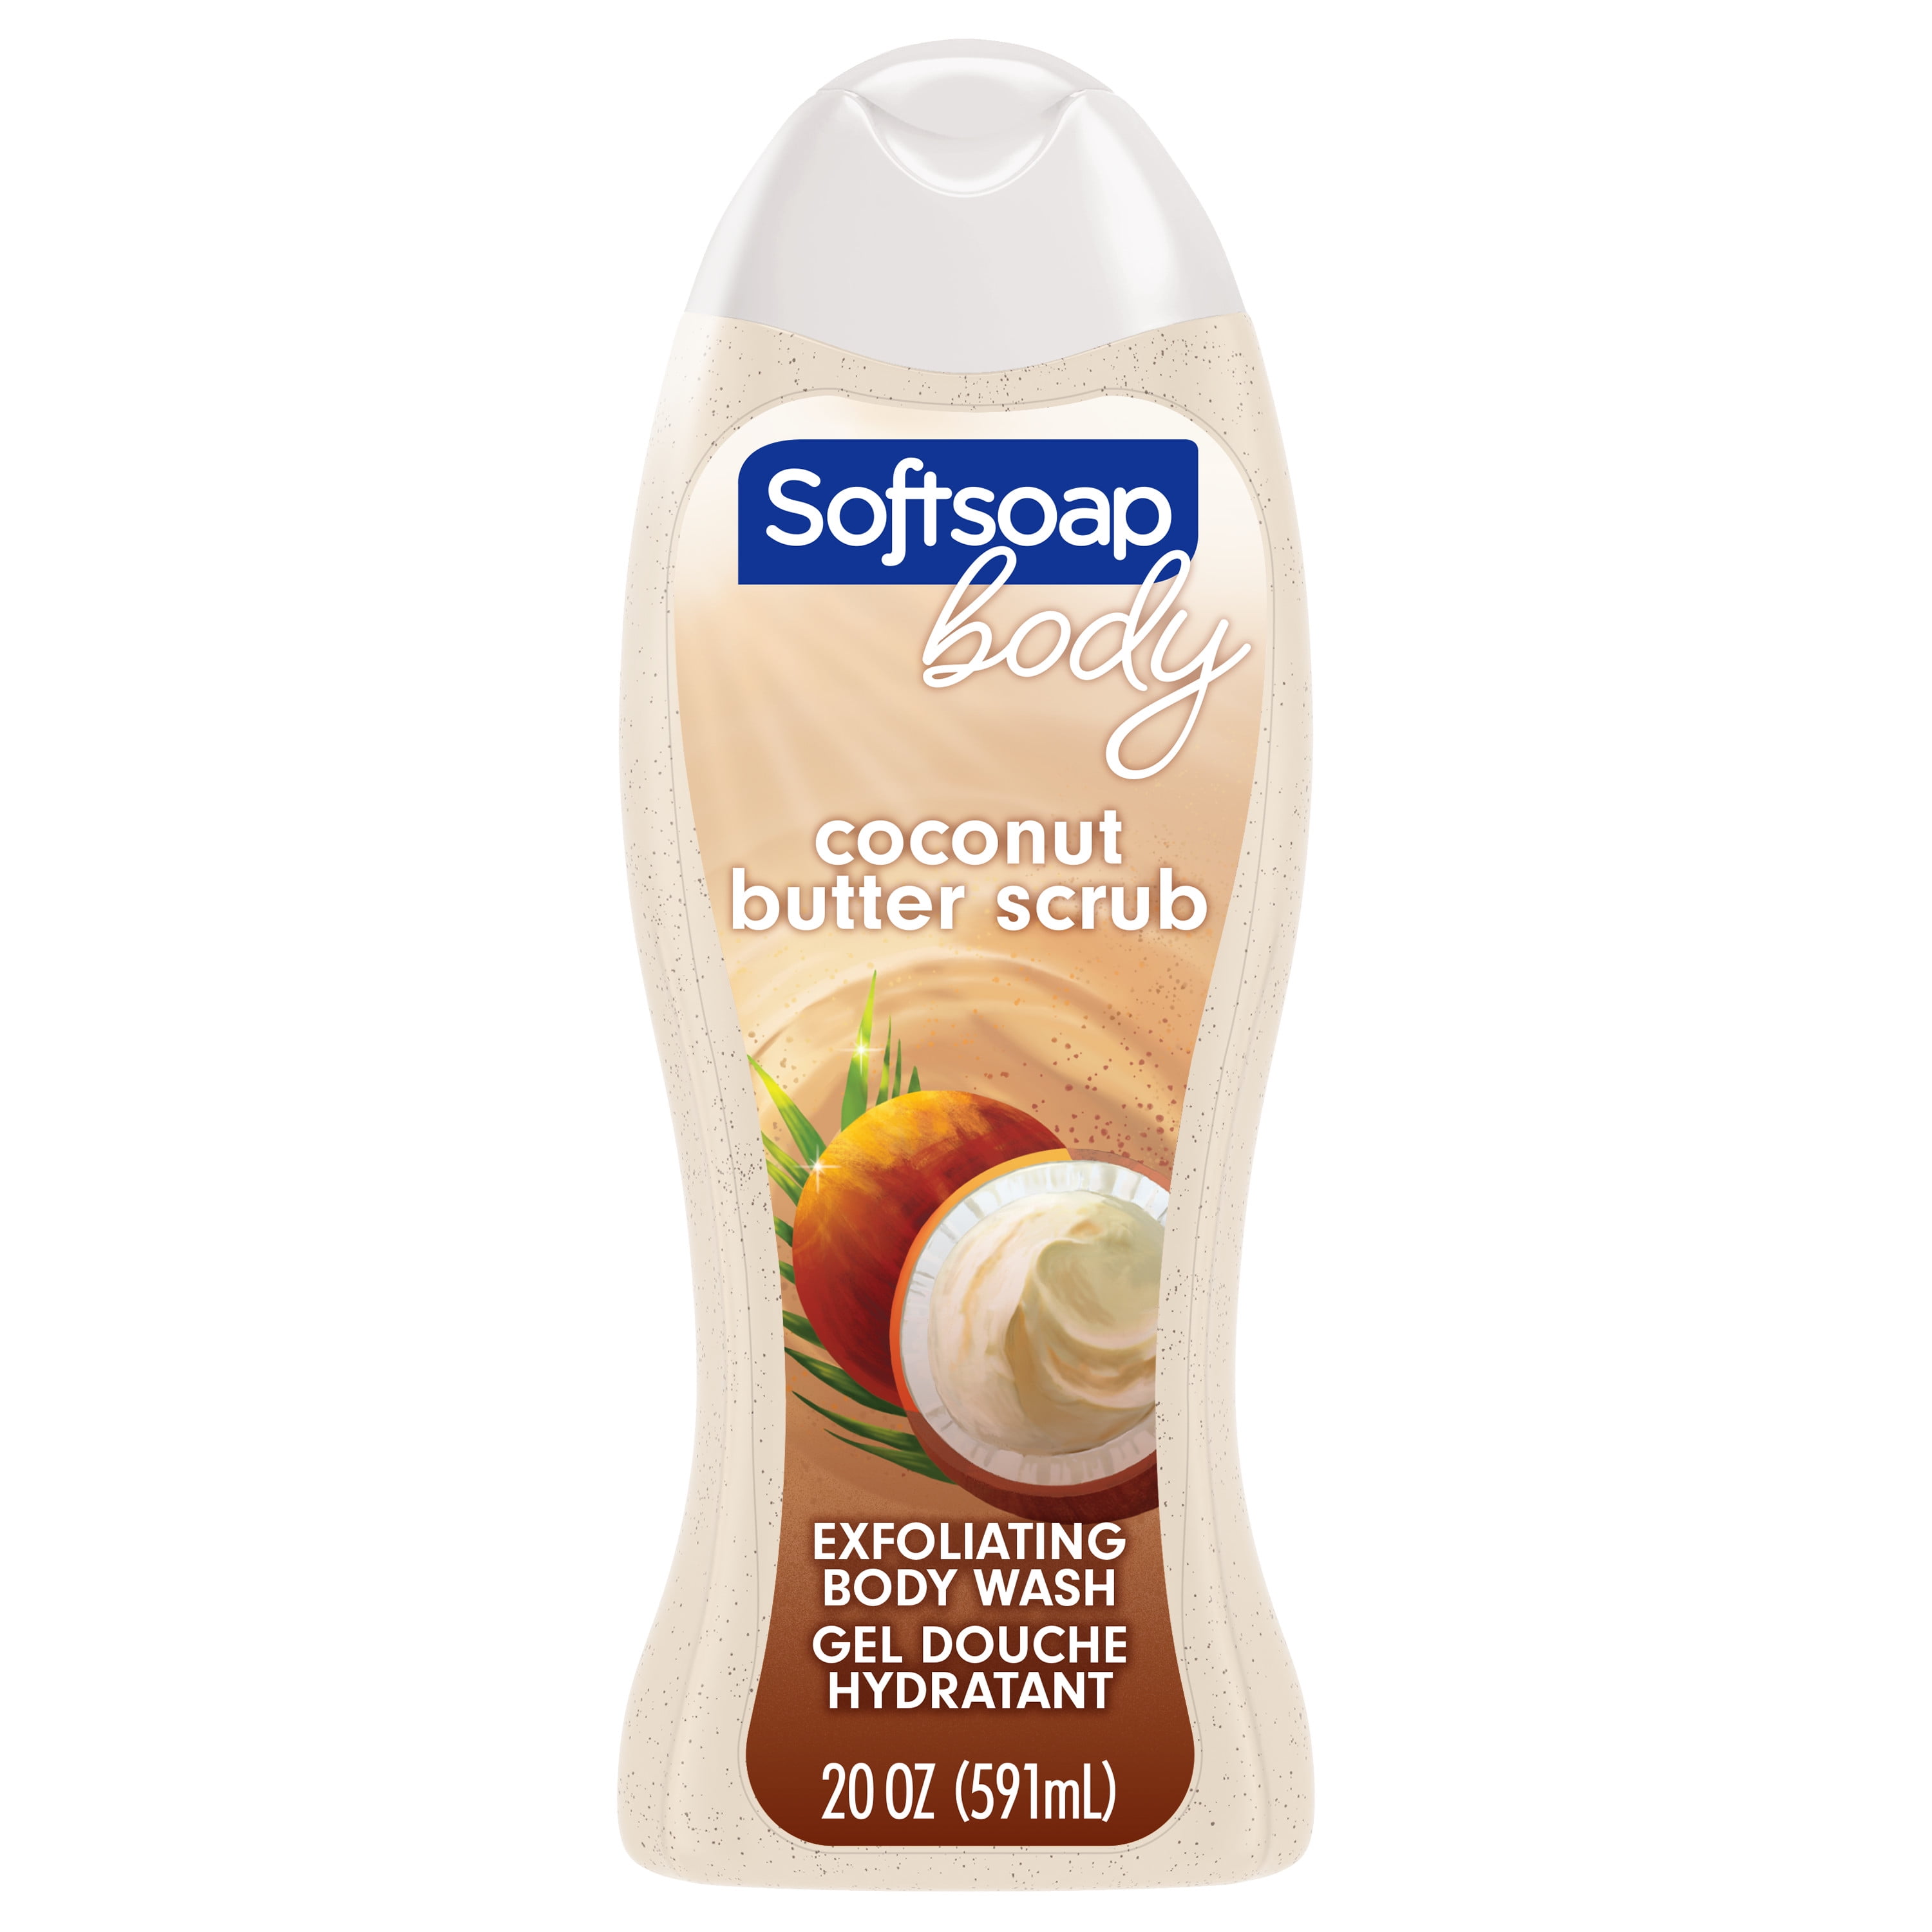 Softsoap Coconut Butter Scrub Body Wash, 20 oz.